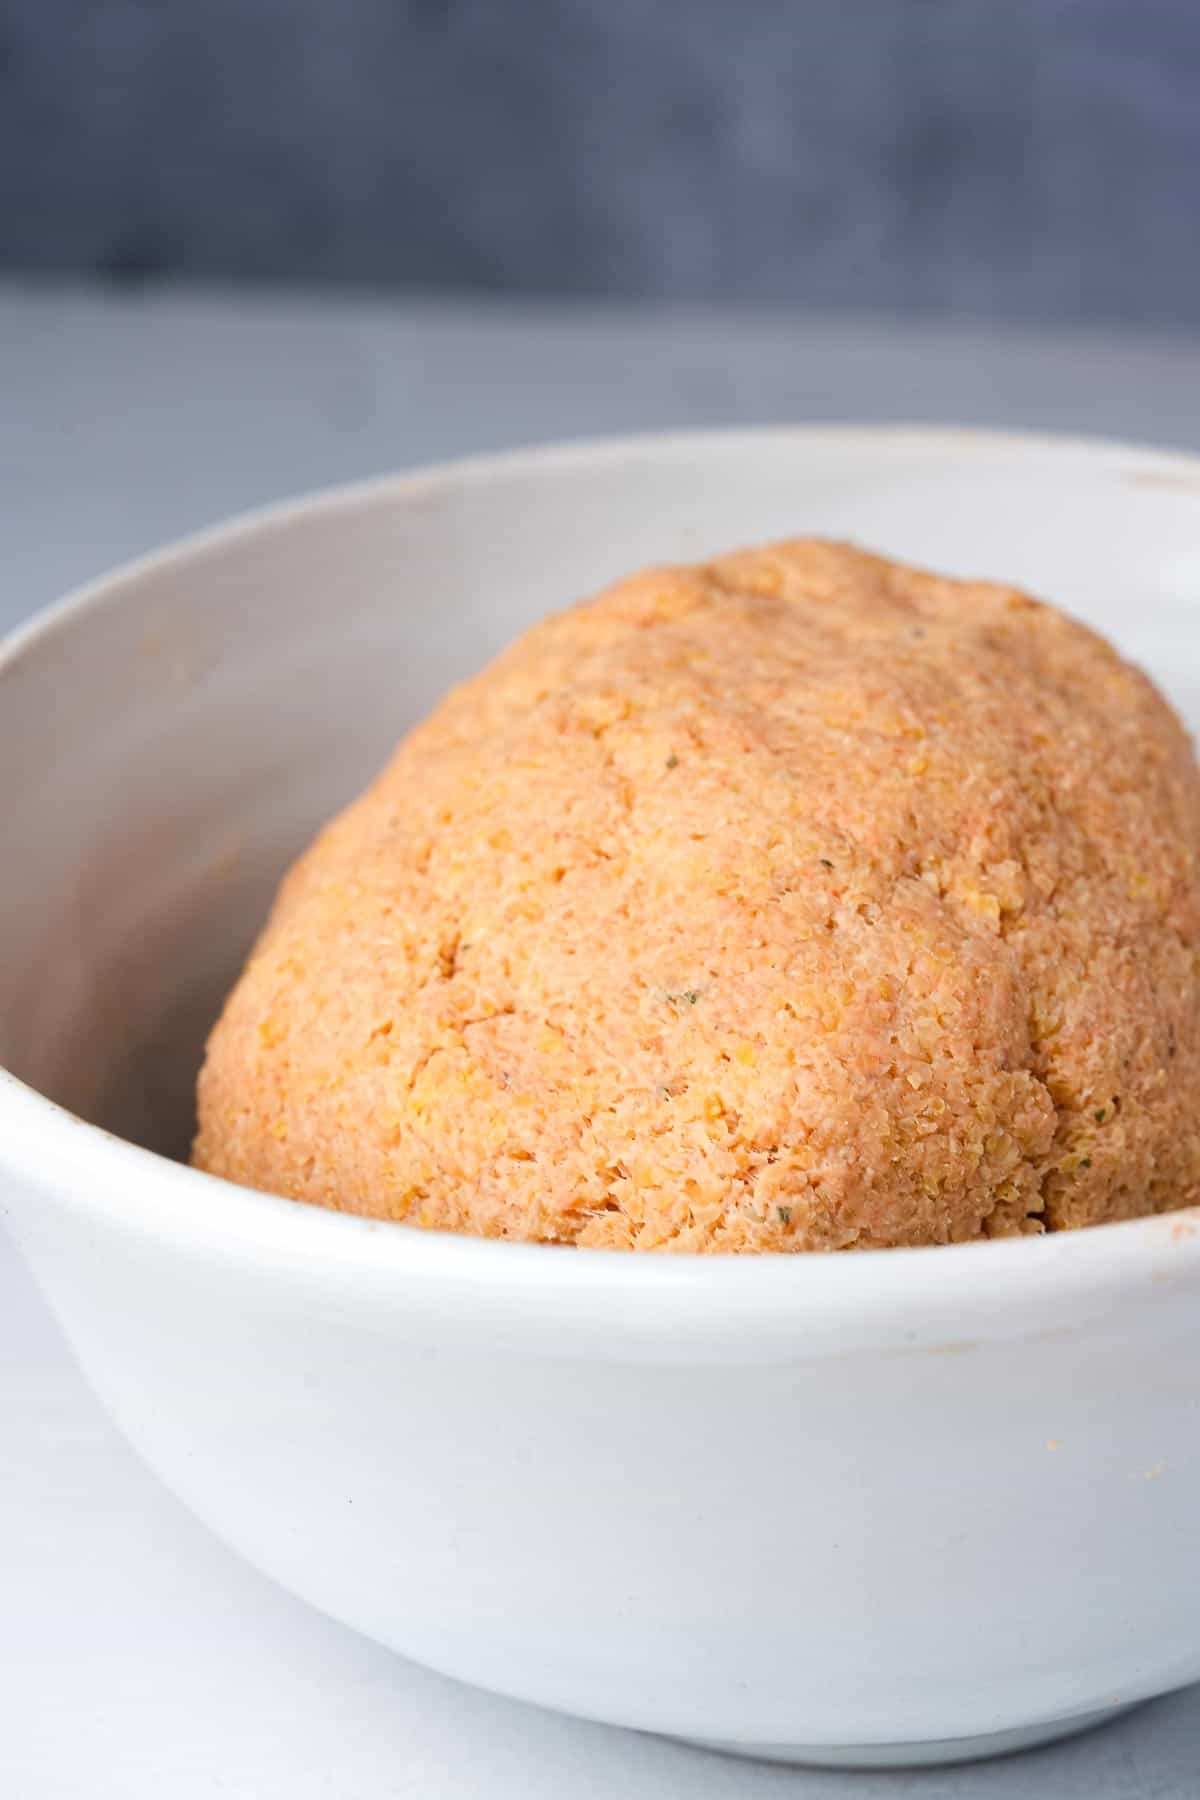 A ball of fellah kofte dough in a white bowl.